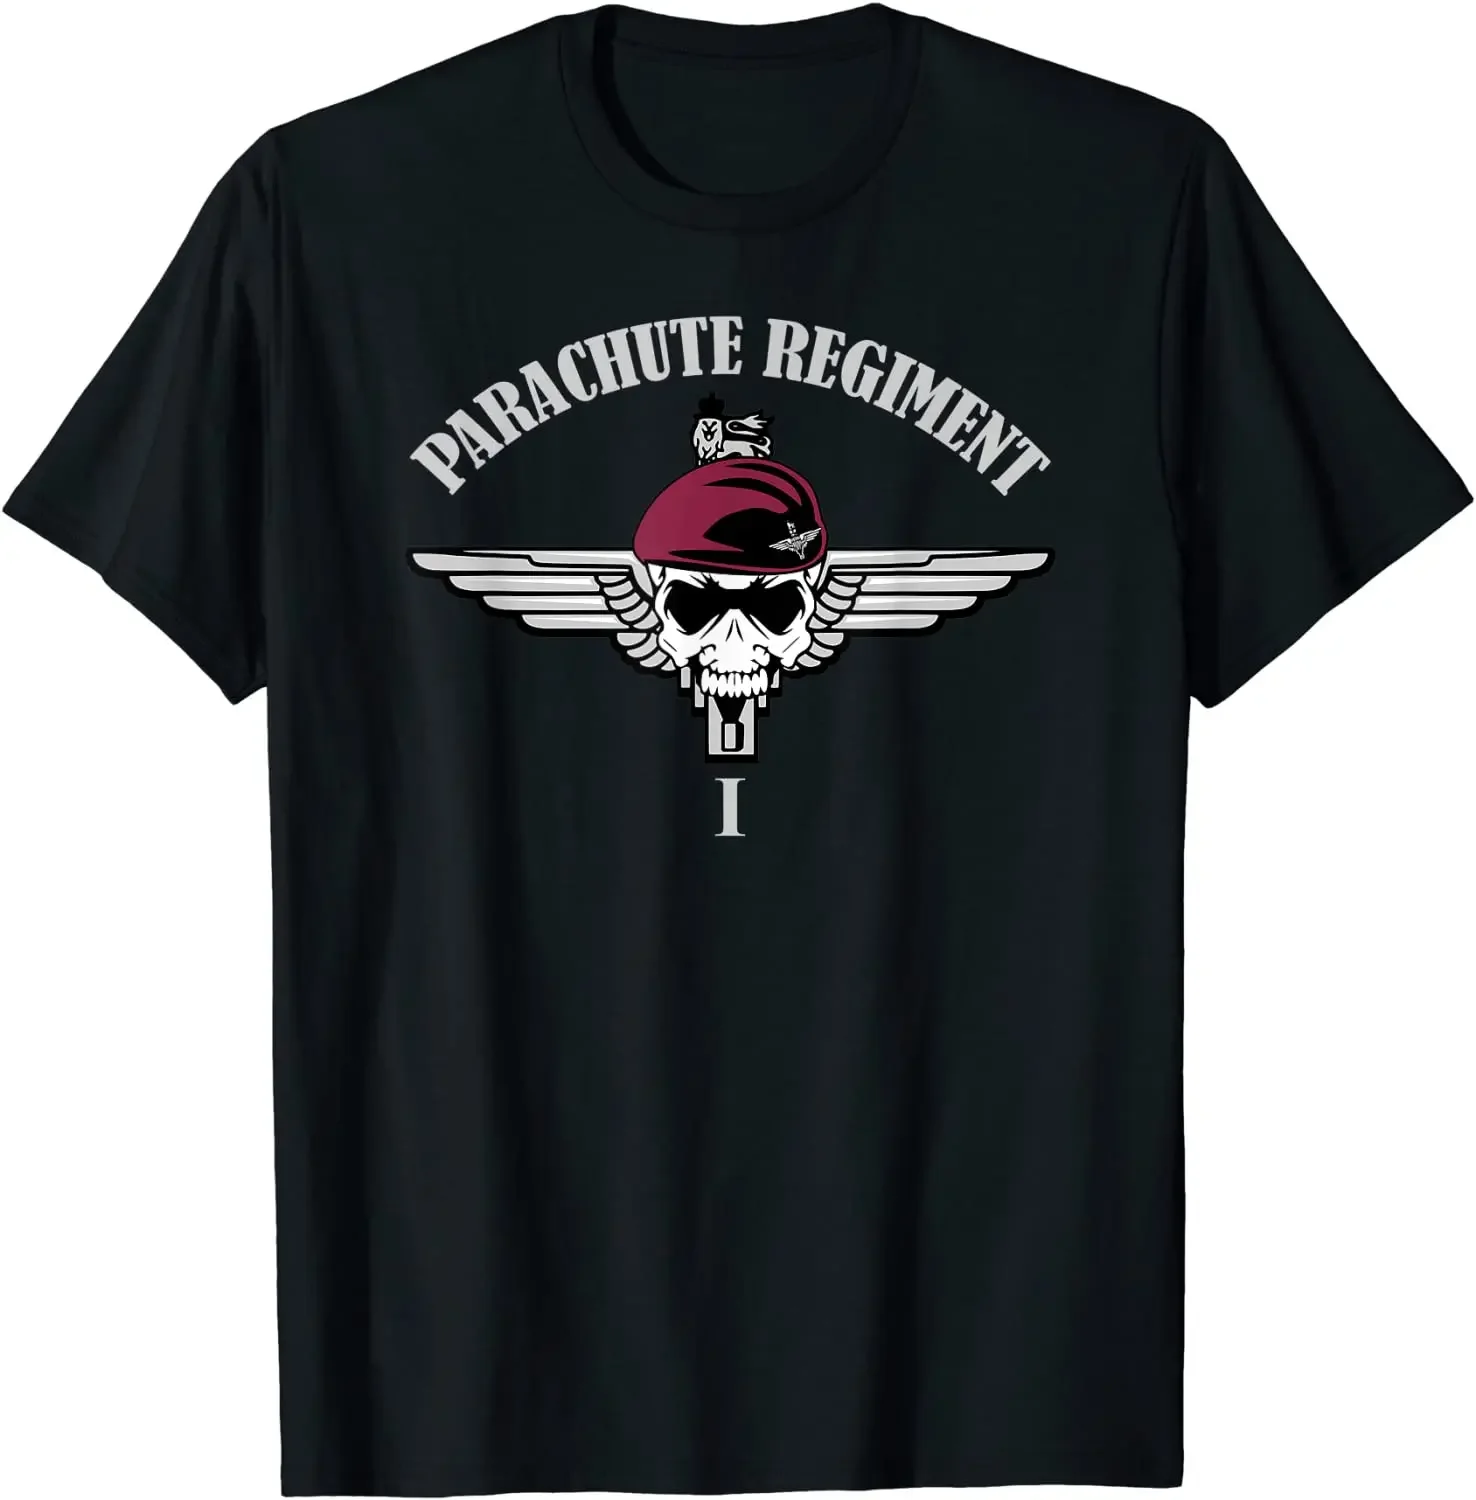 Parachute Regiment - 1st Battalion (1 PARA) Men T-shirt Short Sleeve Casual Cotton O-Neck Summer Tees